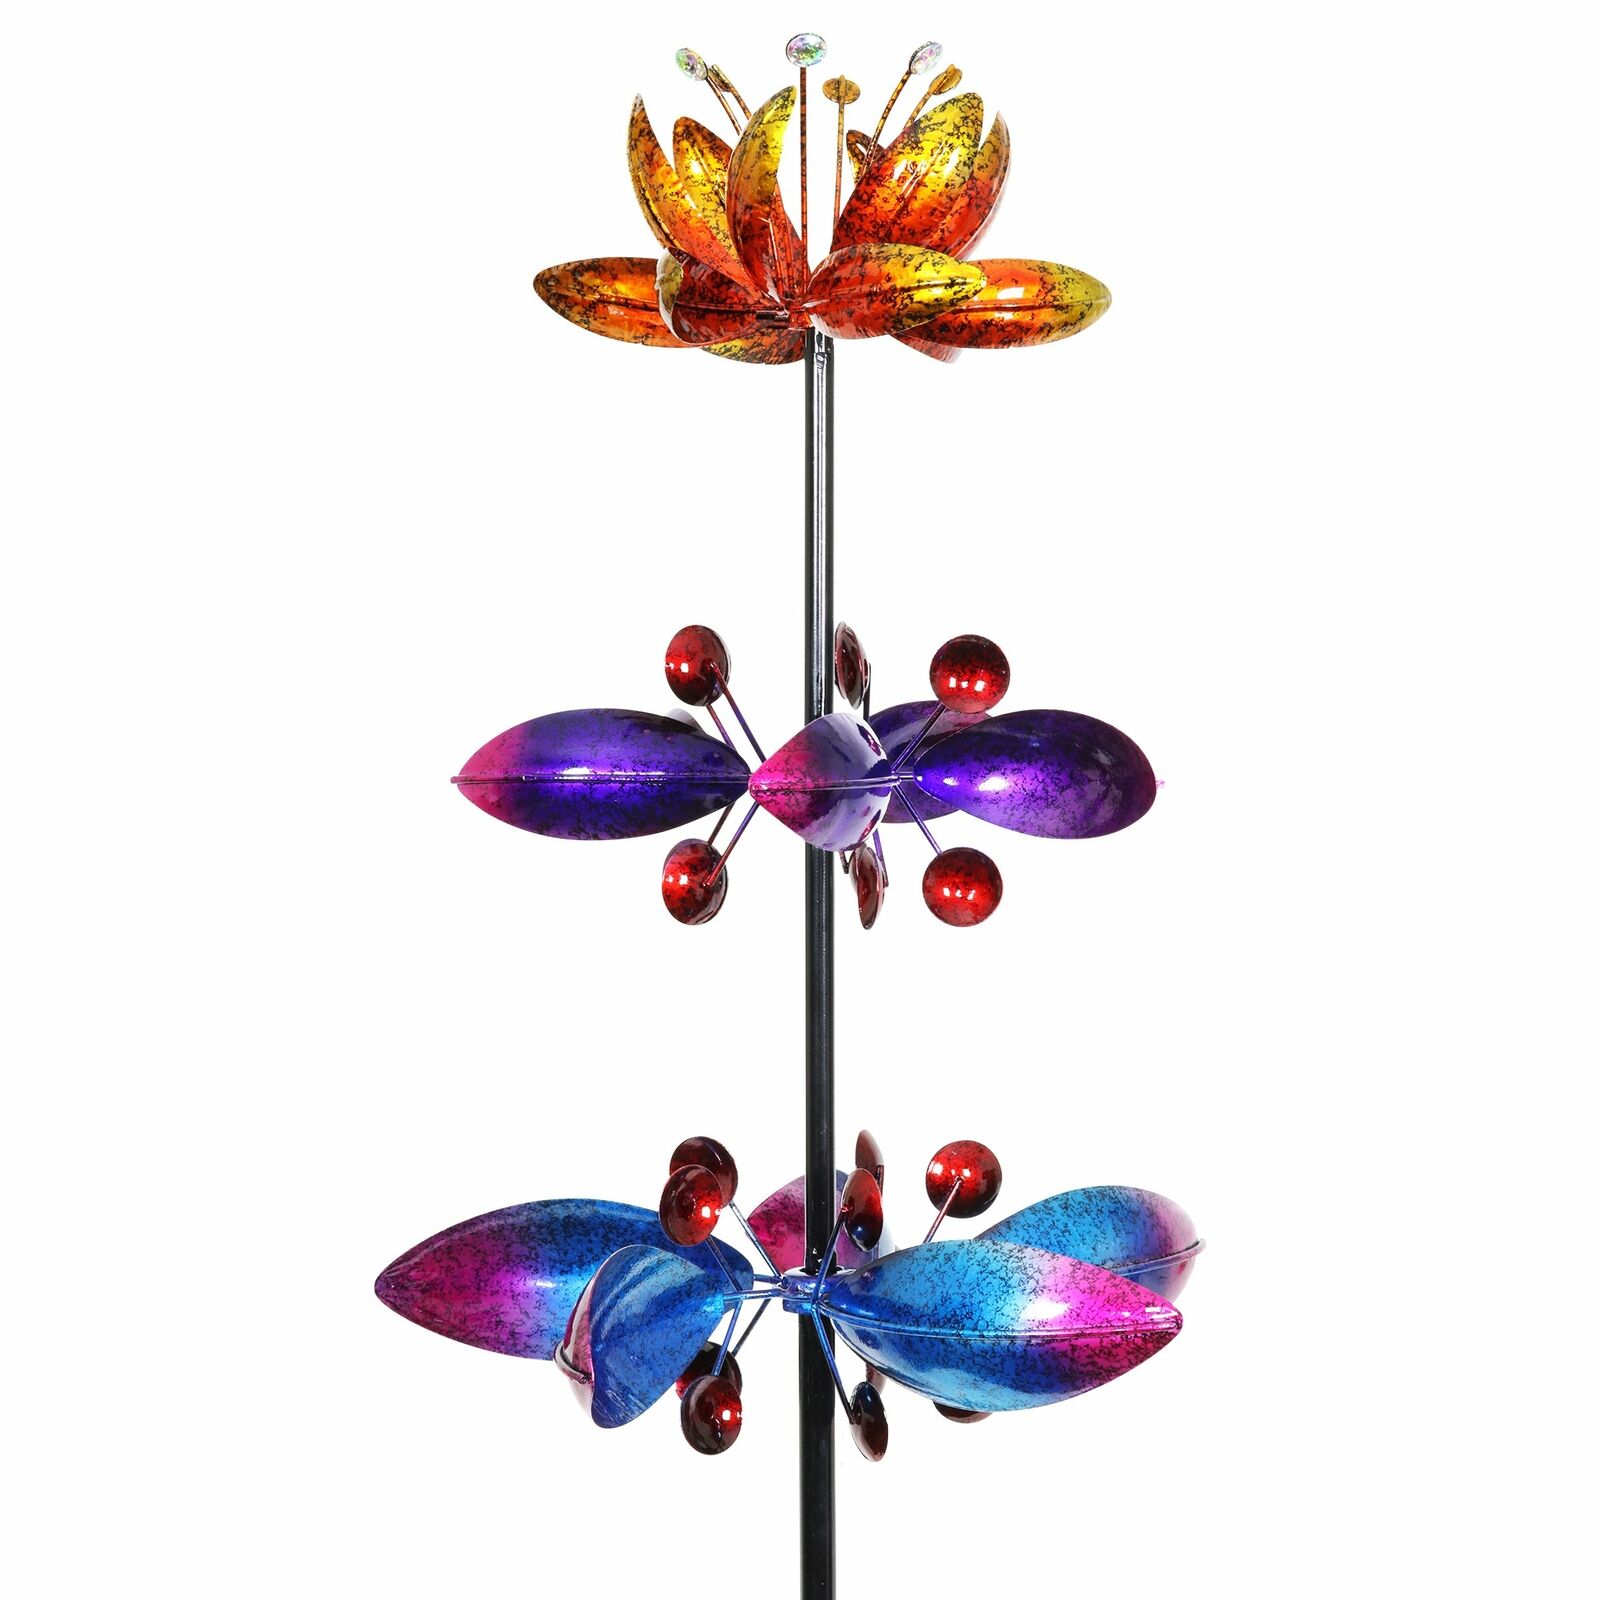 Lotus Flower Wind Spinner Garden Stake with Three Metallic Flowers, 14 by 66 Inc